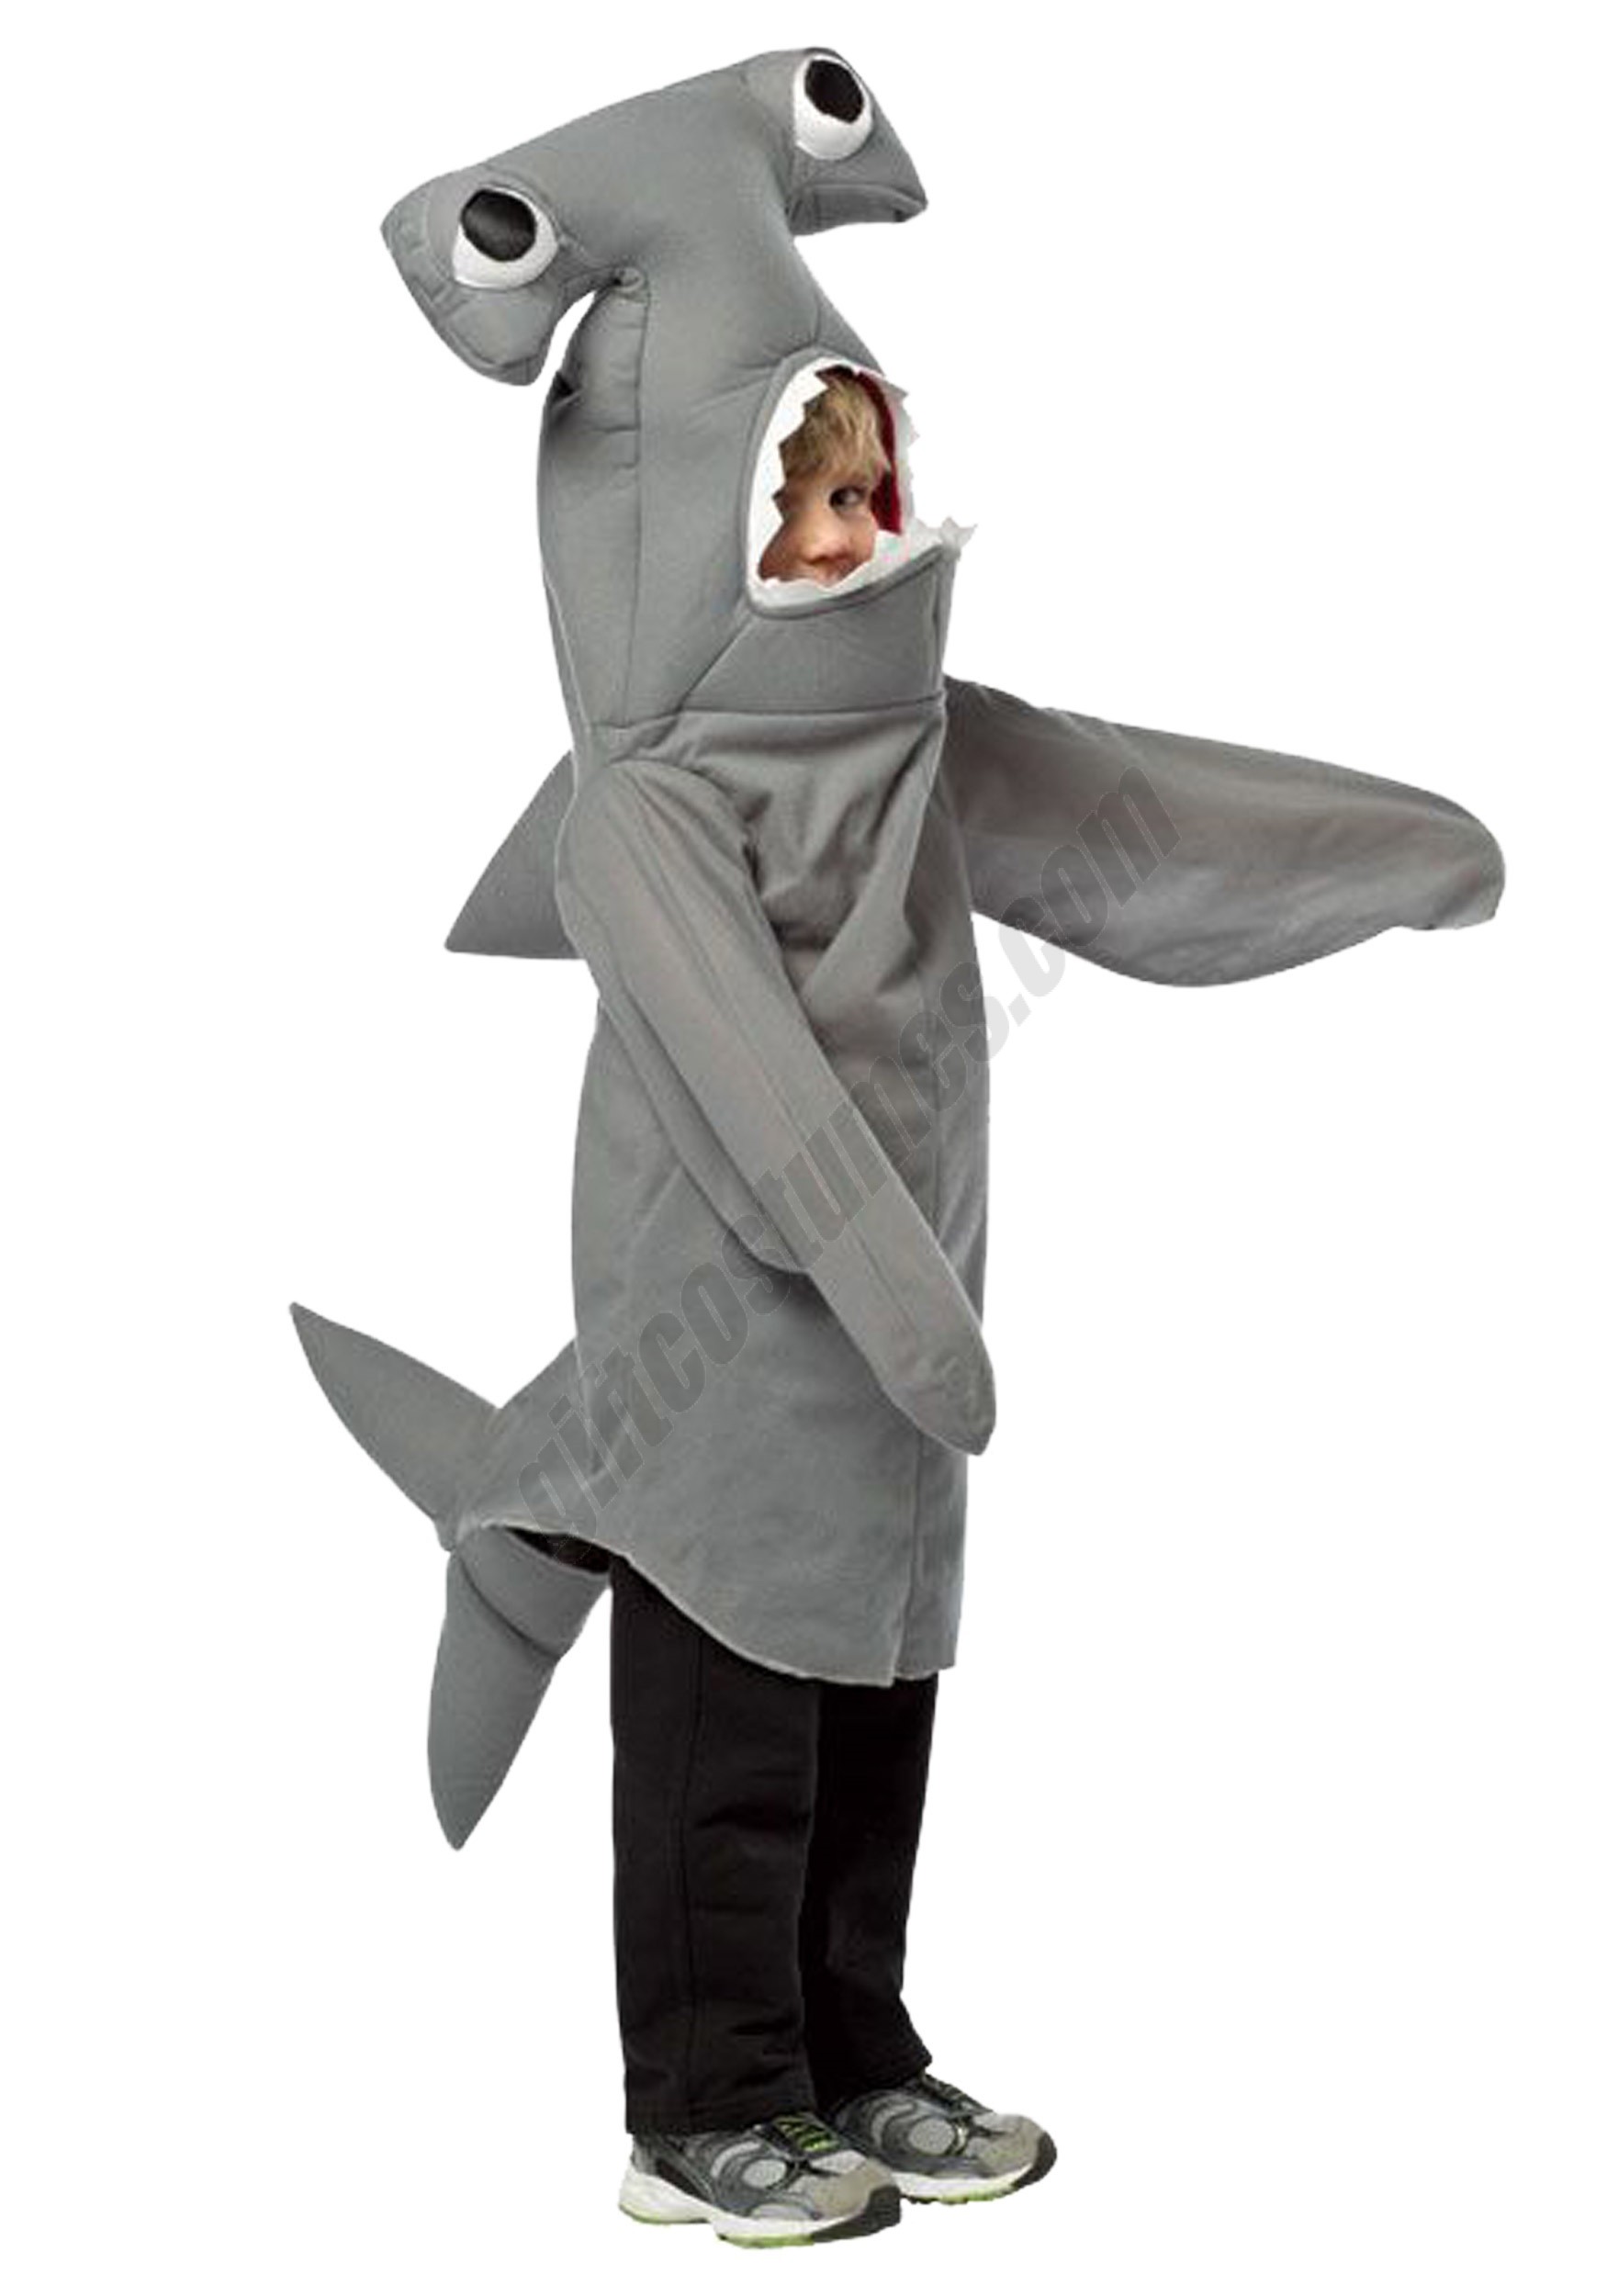 Toddler Hammerhead Shark Costume Promotions - Toddler Hammerhead Shark Costume Promotions